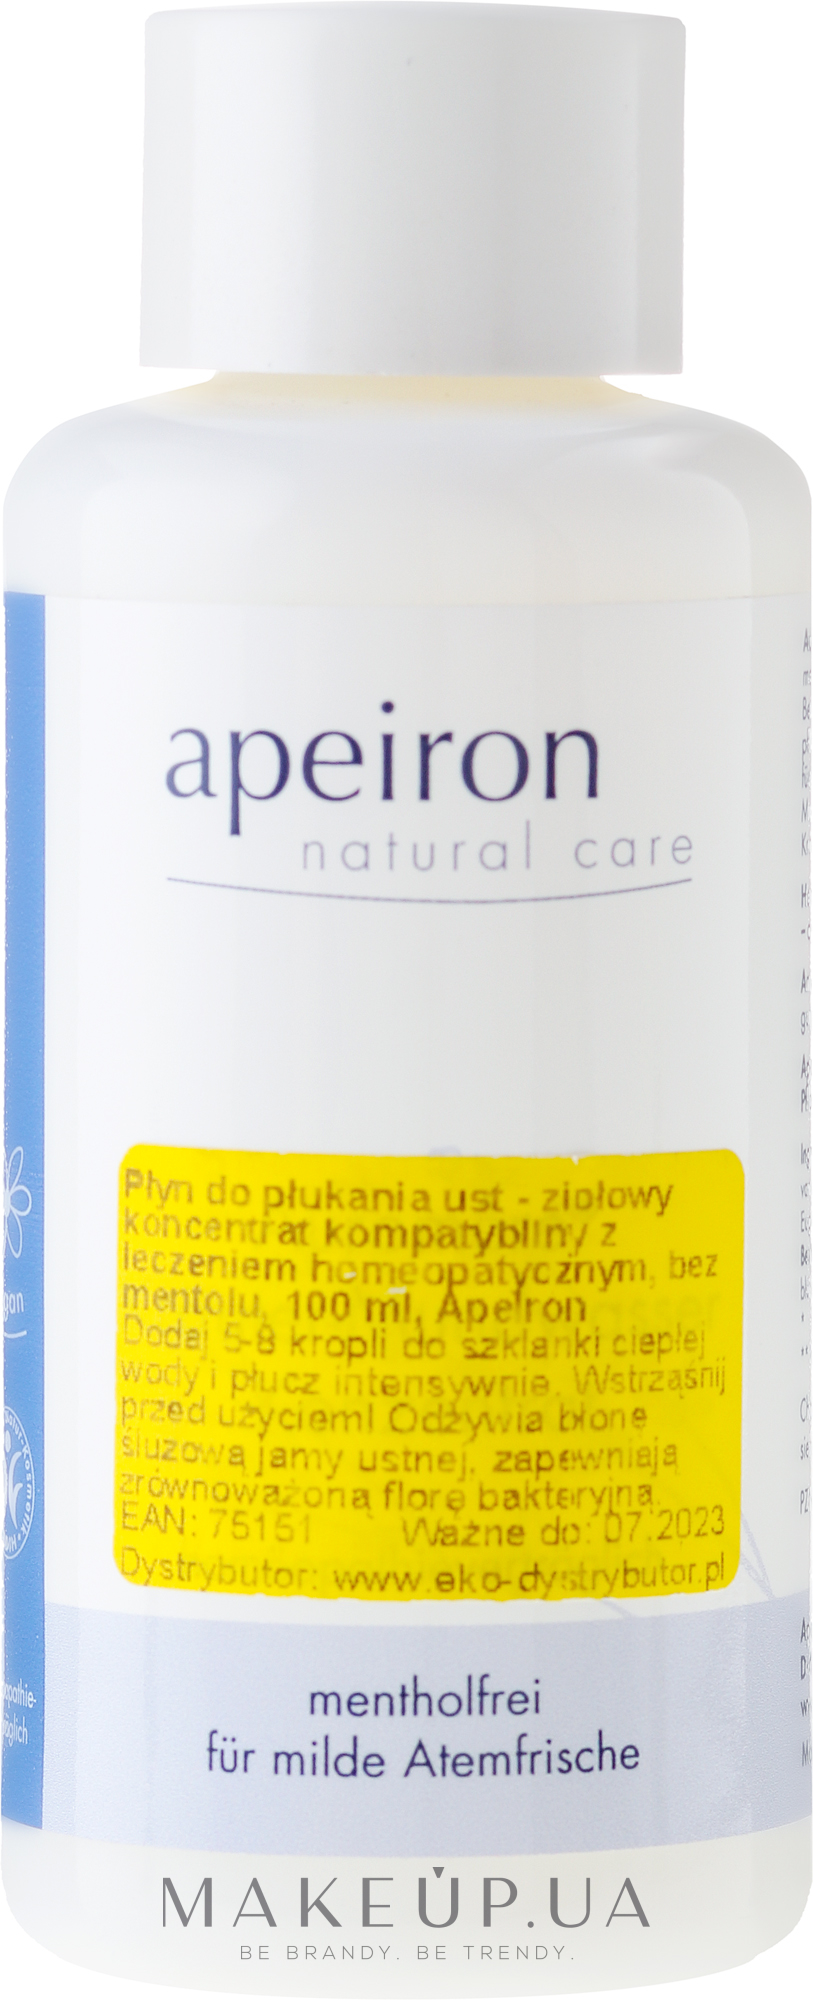 Гомеопатический ополаскиватель-концентрат для полости рта - Apeiron Auromere Herbal Concentrated Mouthwash Homeopathic  — фото 100ml